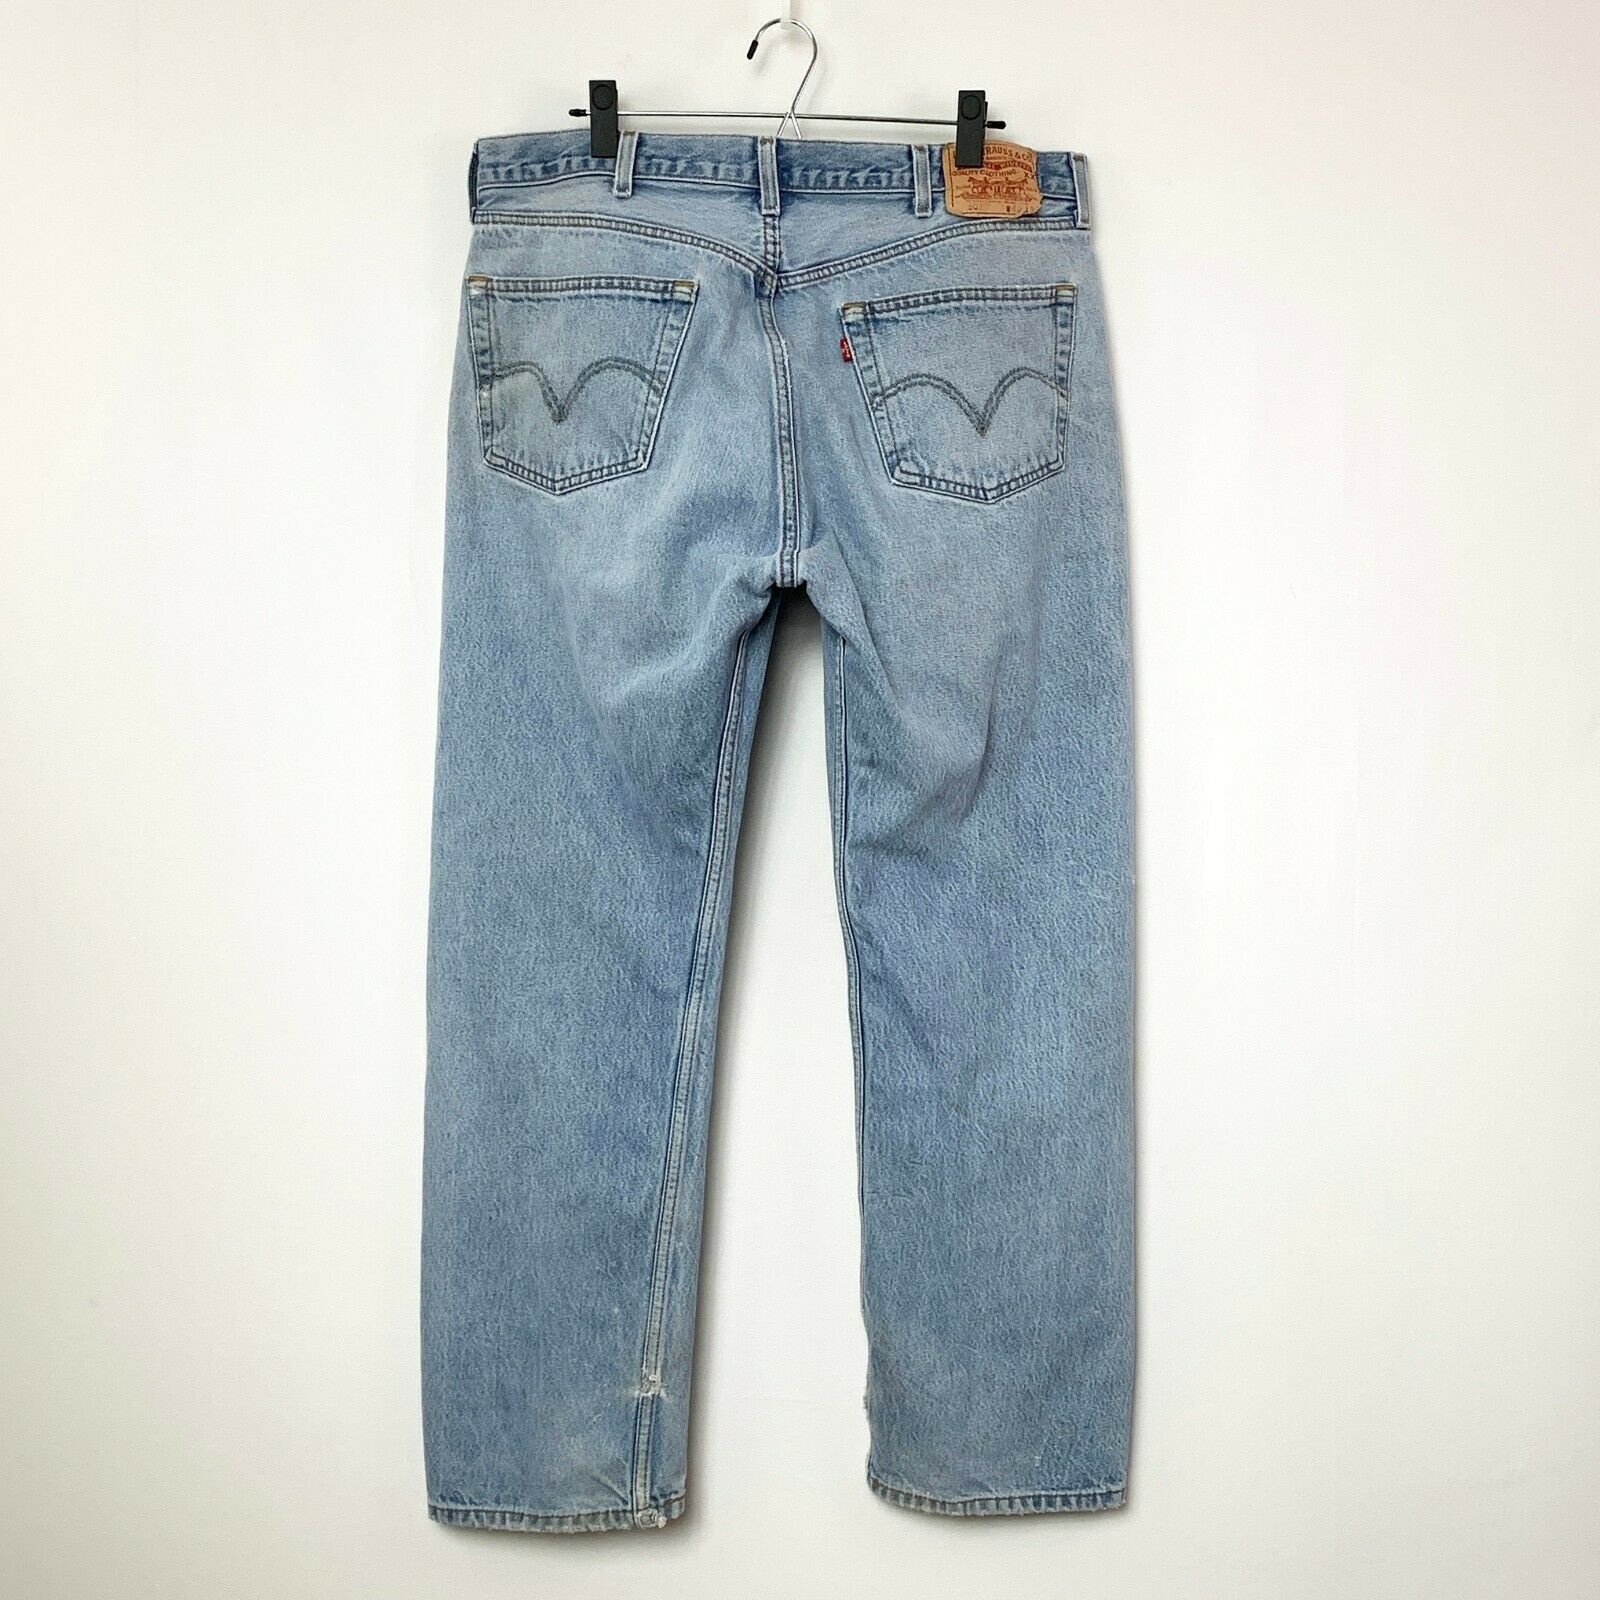 Levi's 501 XX Mens Light Wash Button Fly Jeans 5 Pkt Badge Measures Size 38x30